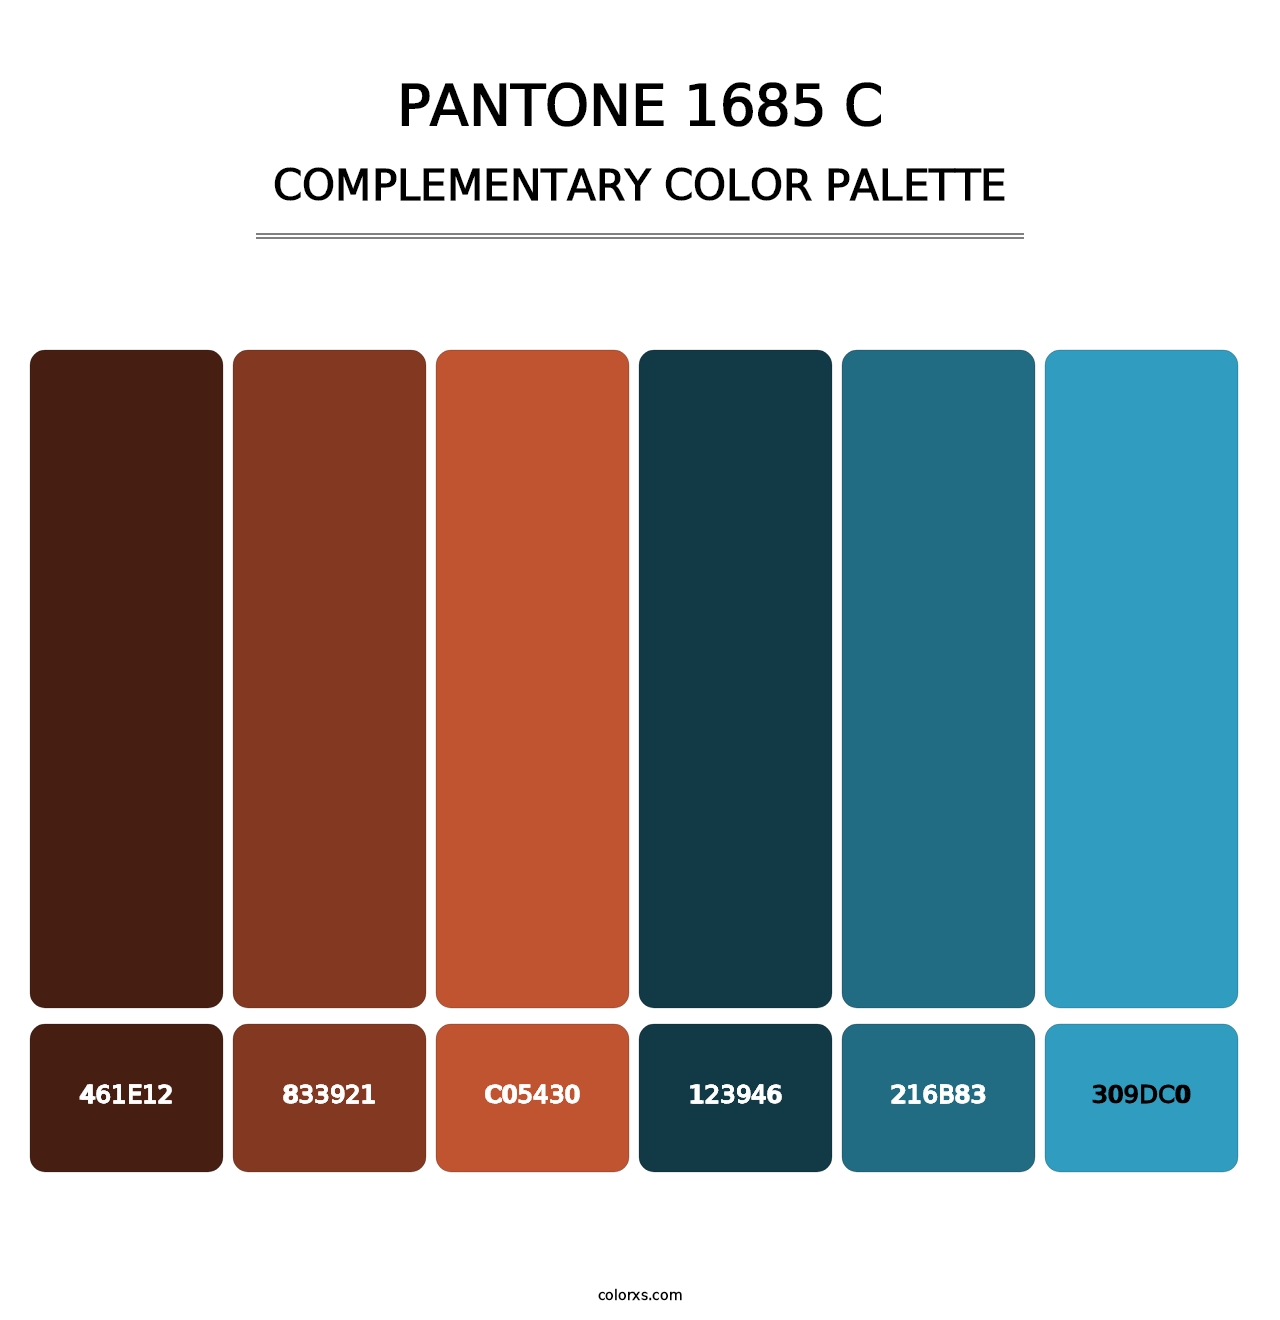 PANTONE 1685 C - Complementary Color Palette